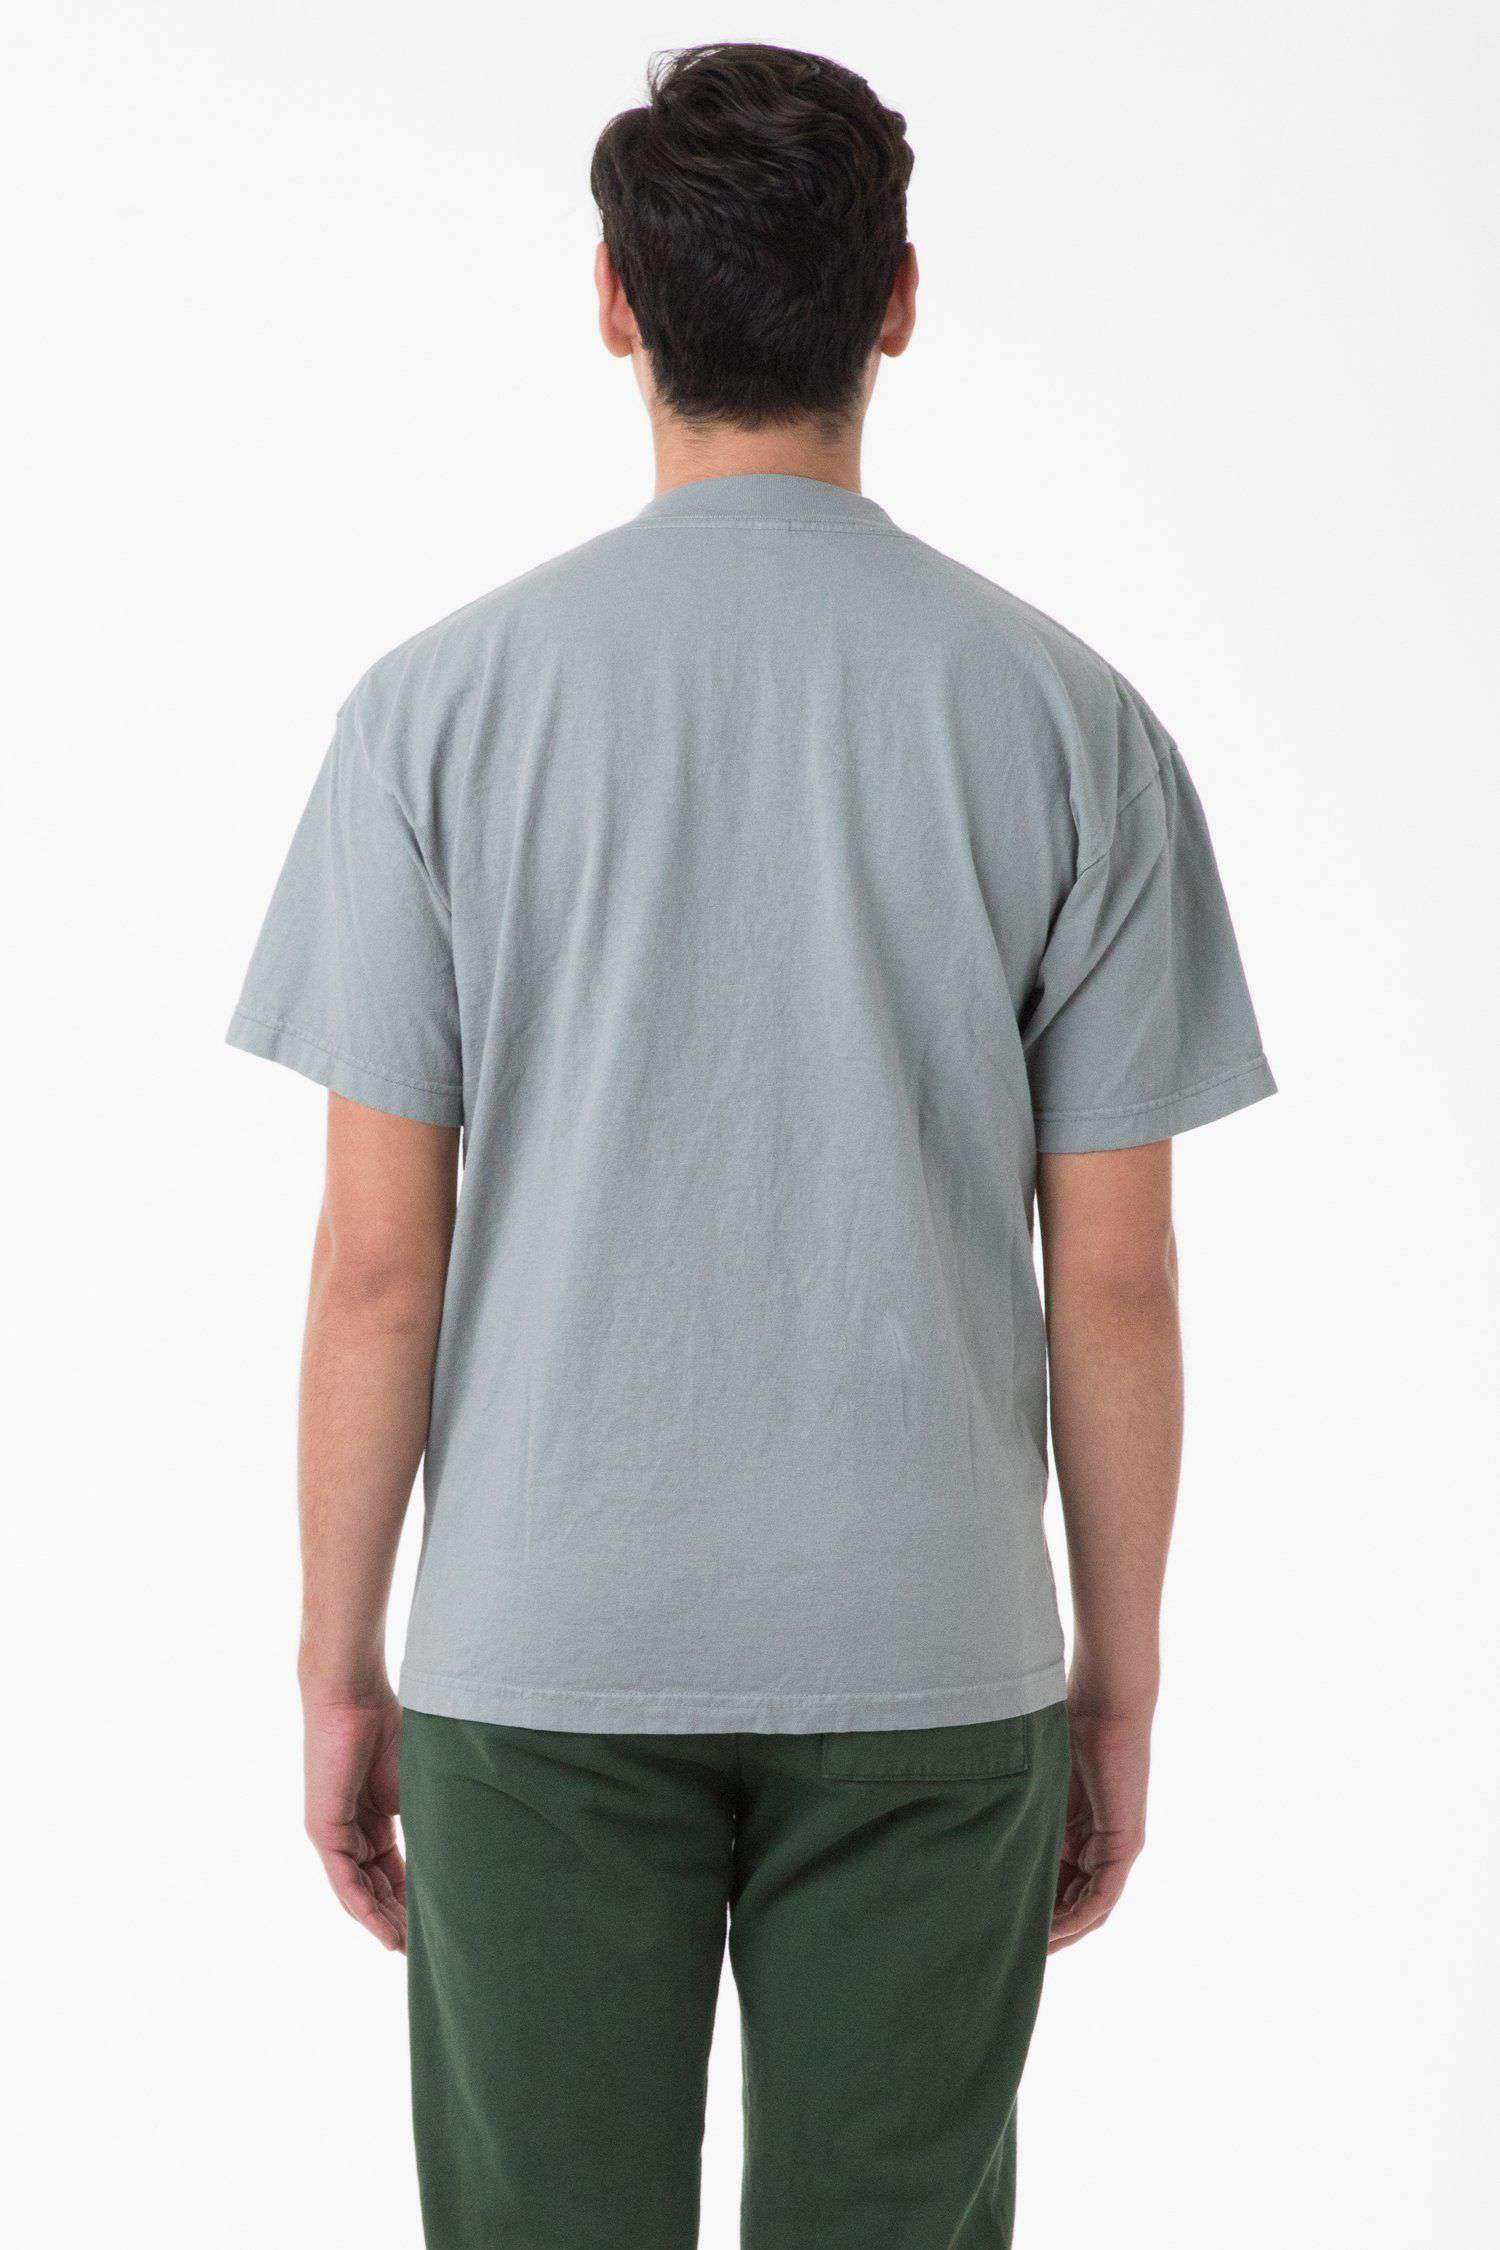 1405GD - Short Sleeve Garment Dye Mockneck T-Shirt T-Shirt Los Angeles Apparel 